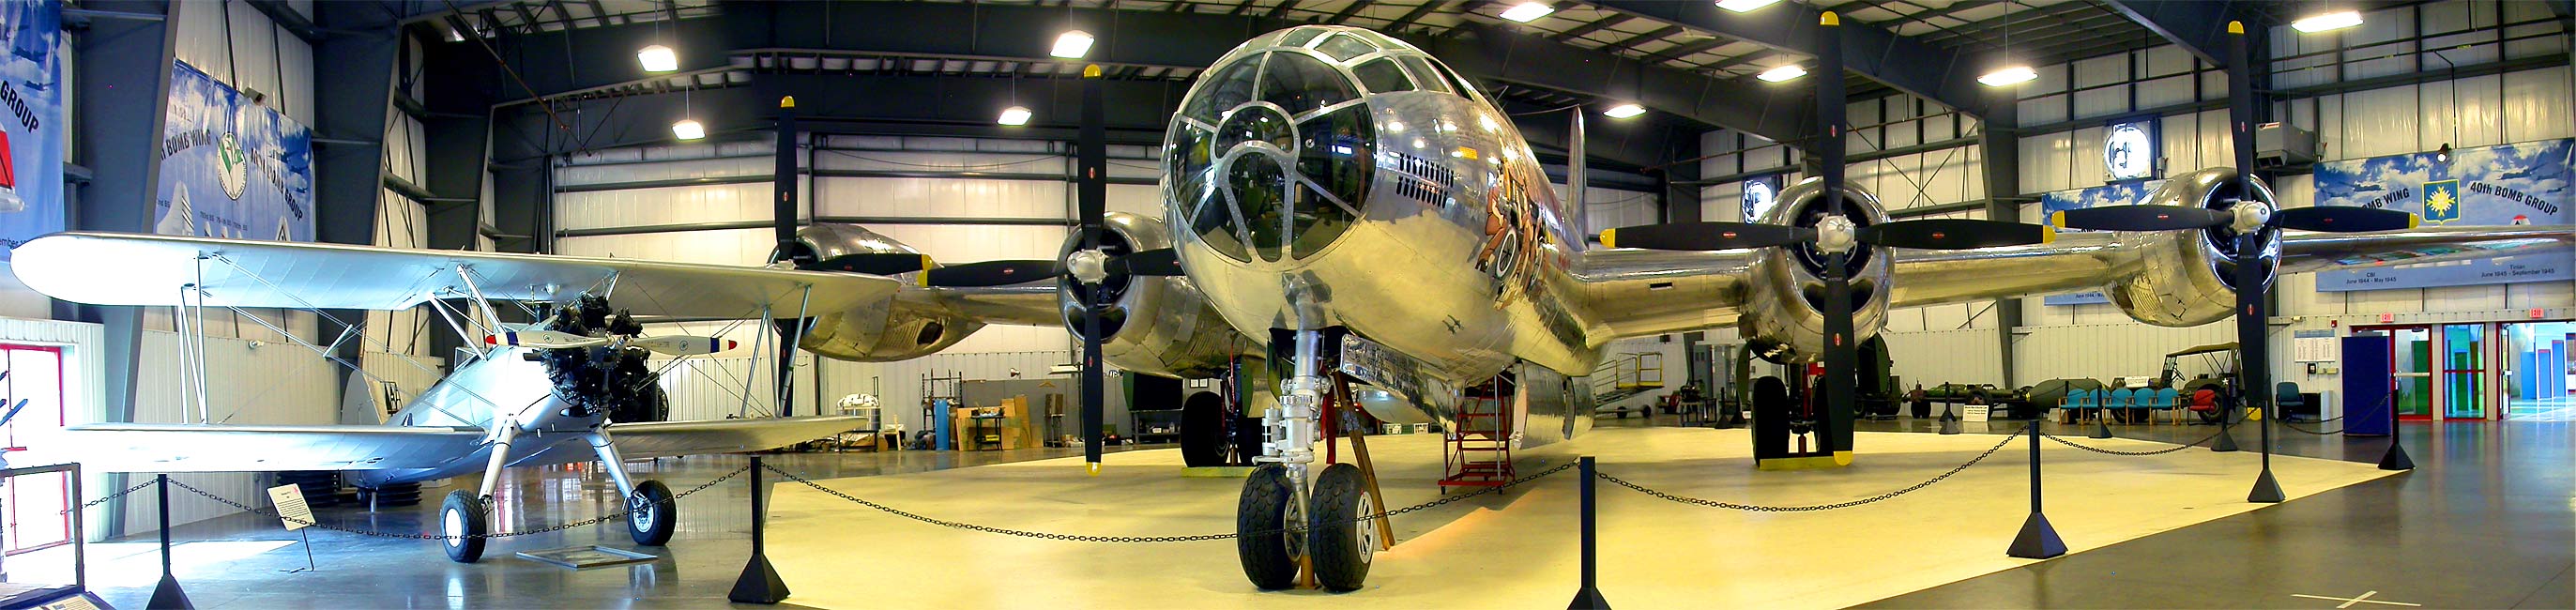 Jacks Hack Boeing B-29 Superfortress WWII heavy bomber